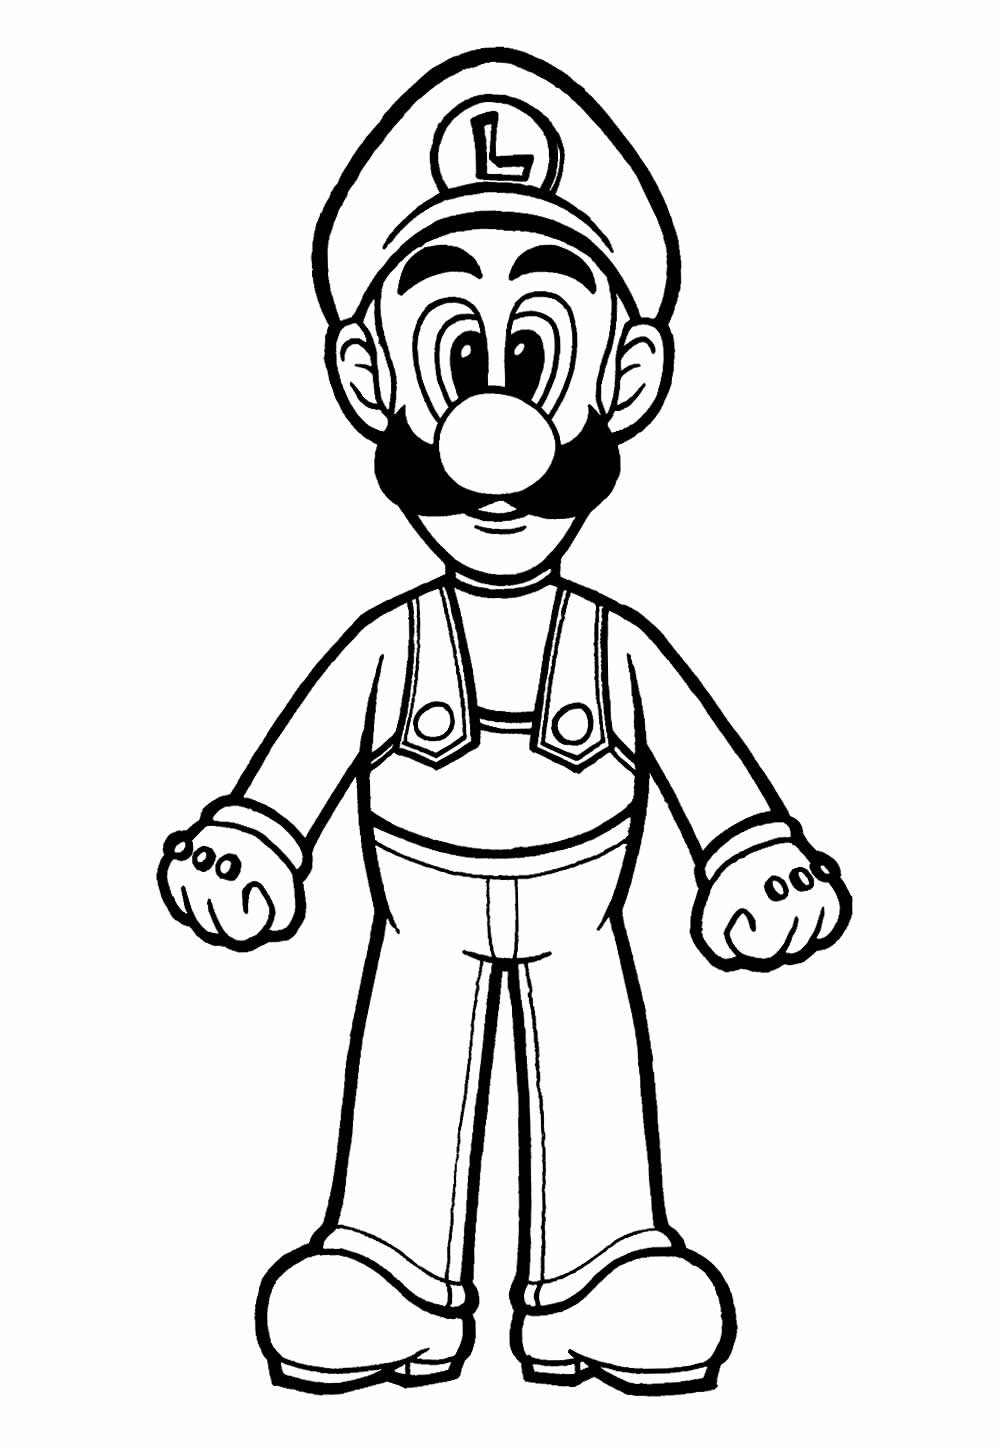 Desenho de Luigi para colorir